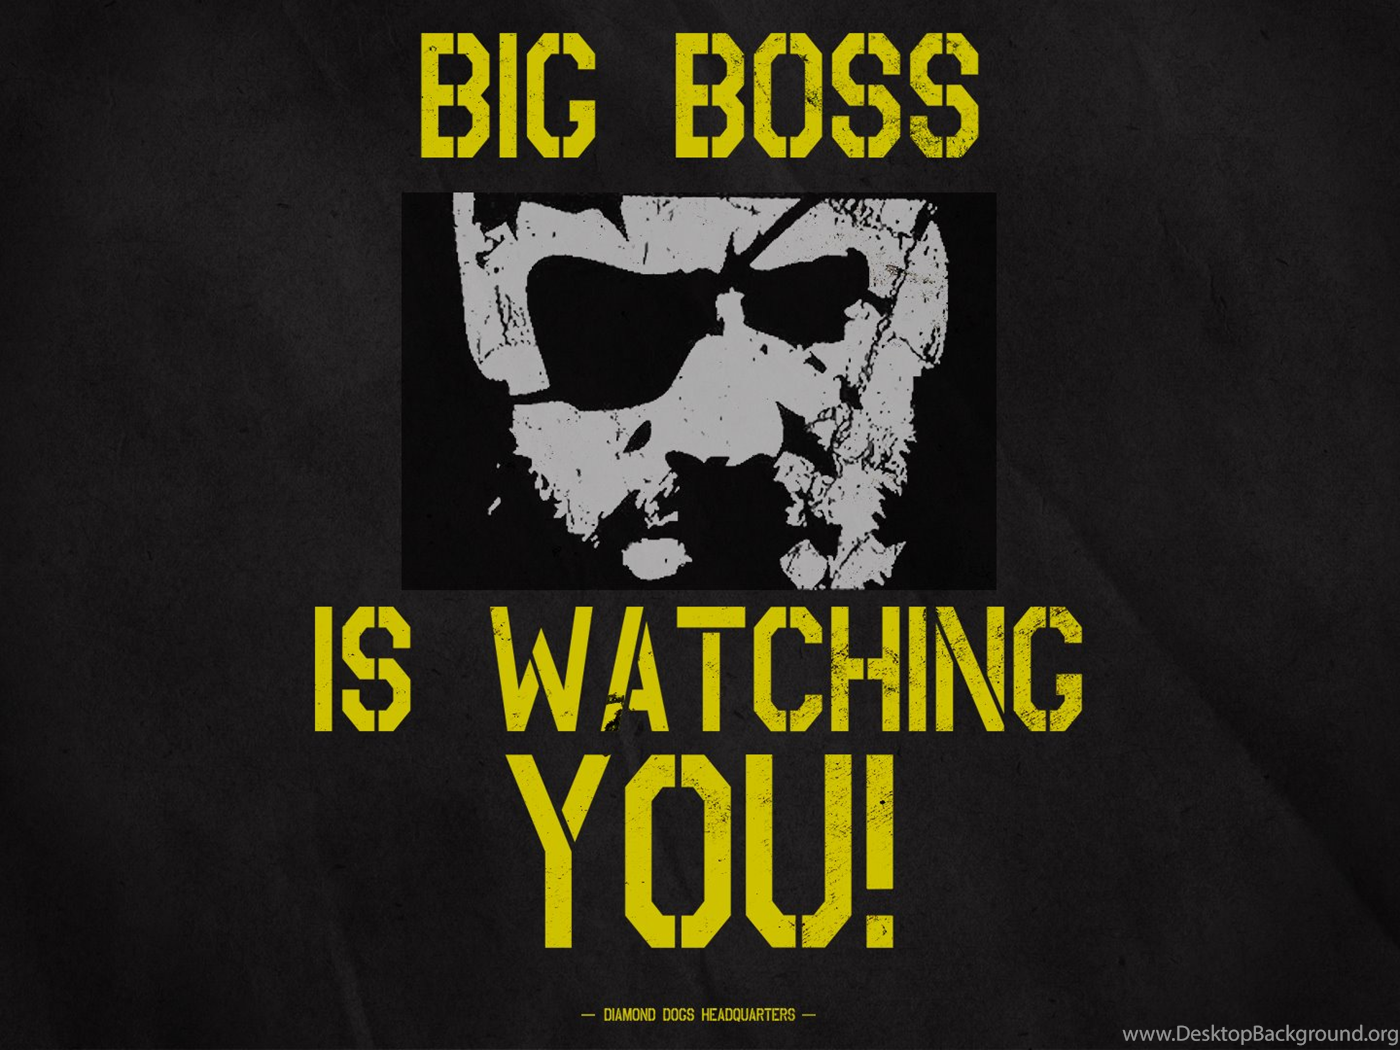 Boss is watching. МГС 5 плакат big Boss is watching you. Big Boss is watching you. МГС 5 big Boss watching you. Биг босс 1984.